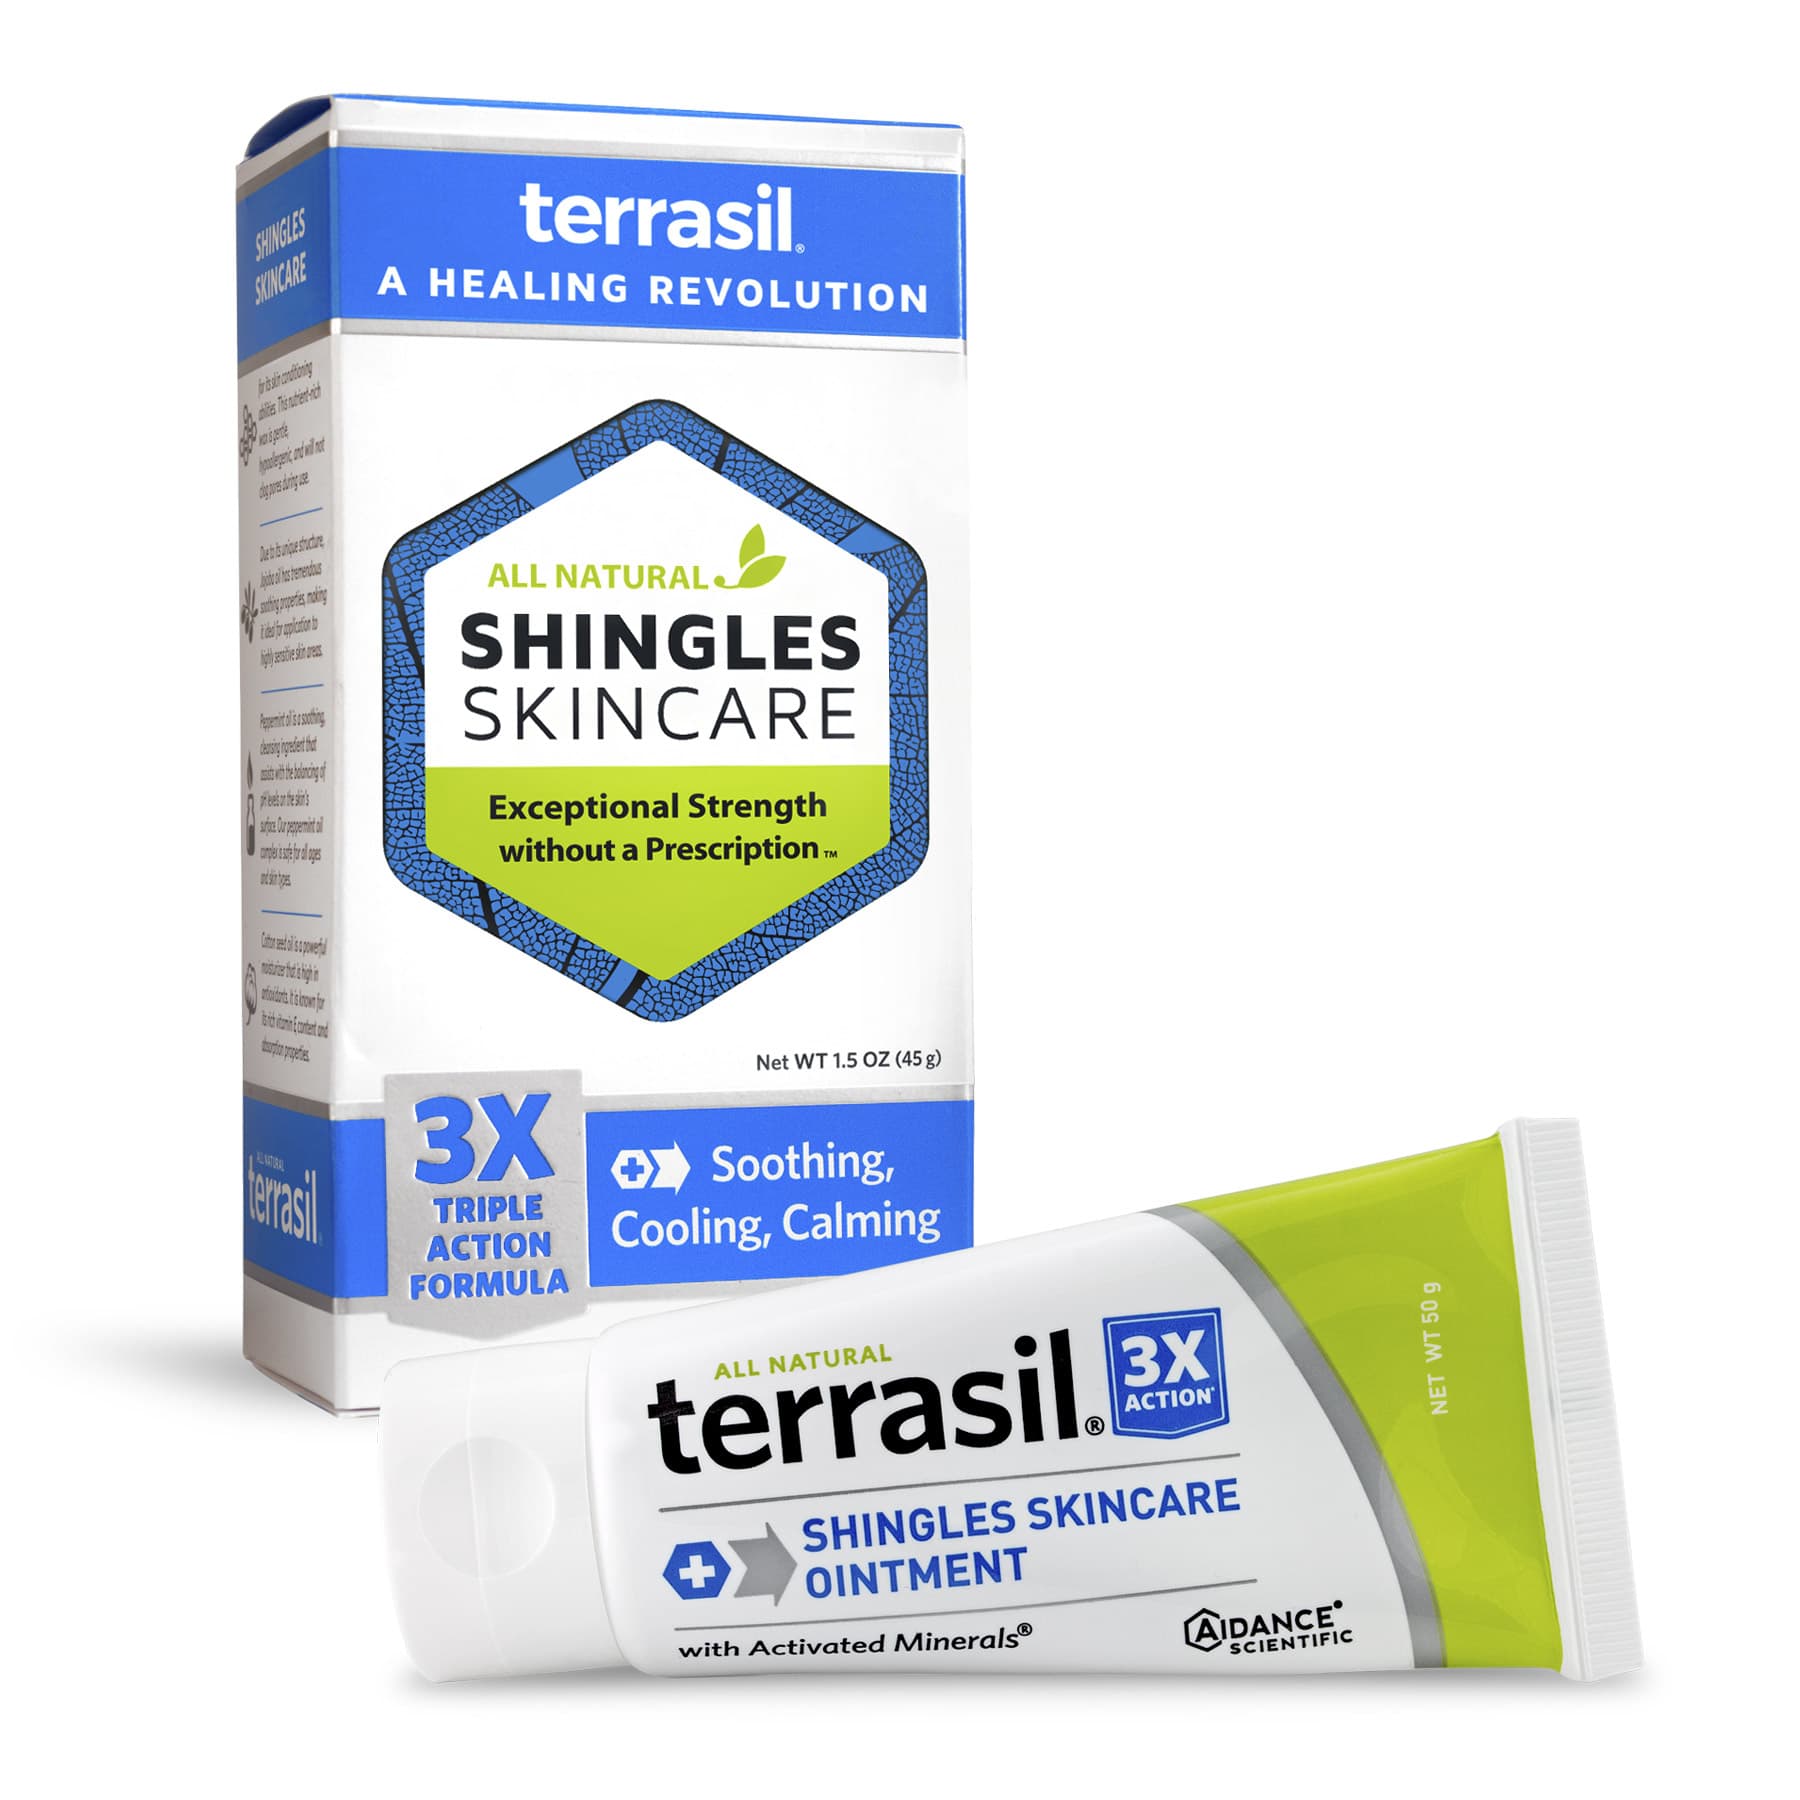 TerrasilÂ® Shingles Skincare Ointment with All